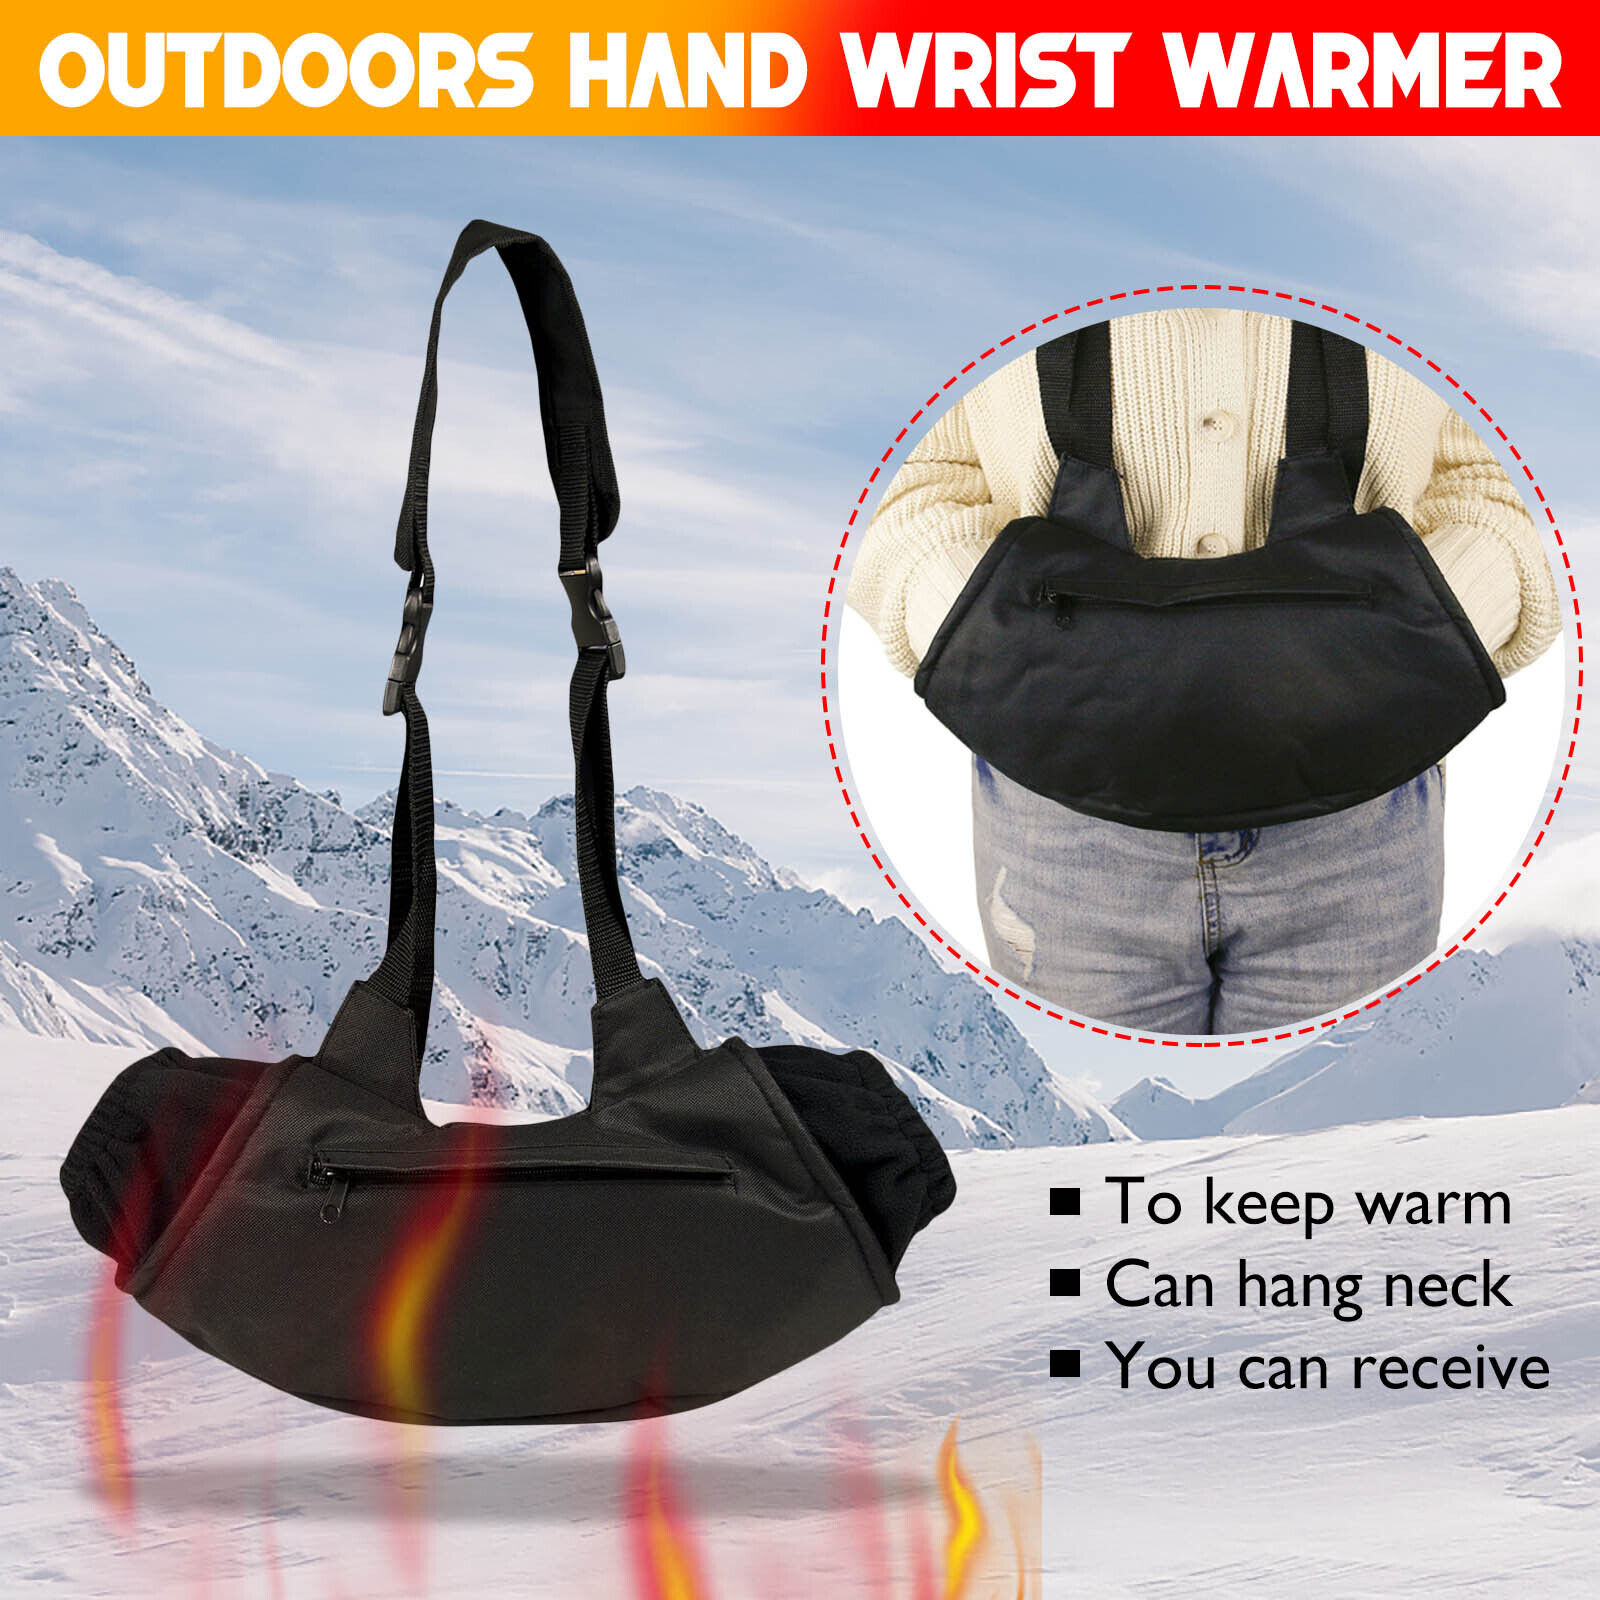 Outdoors Hand Wrist Warmer Bag Portable Camping Handbag Winter Warm Gloves